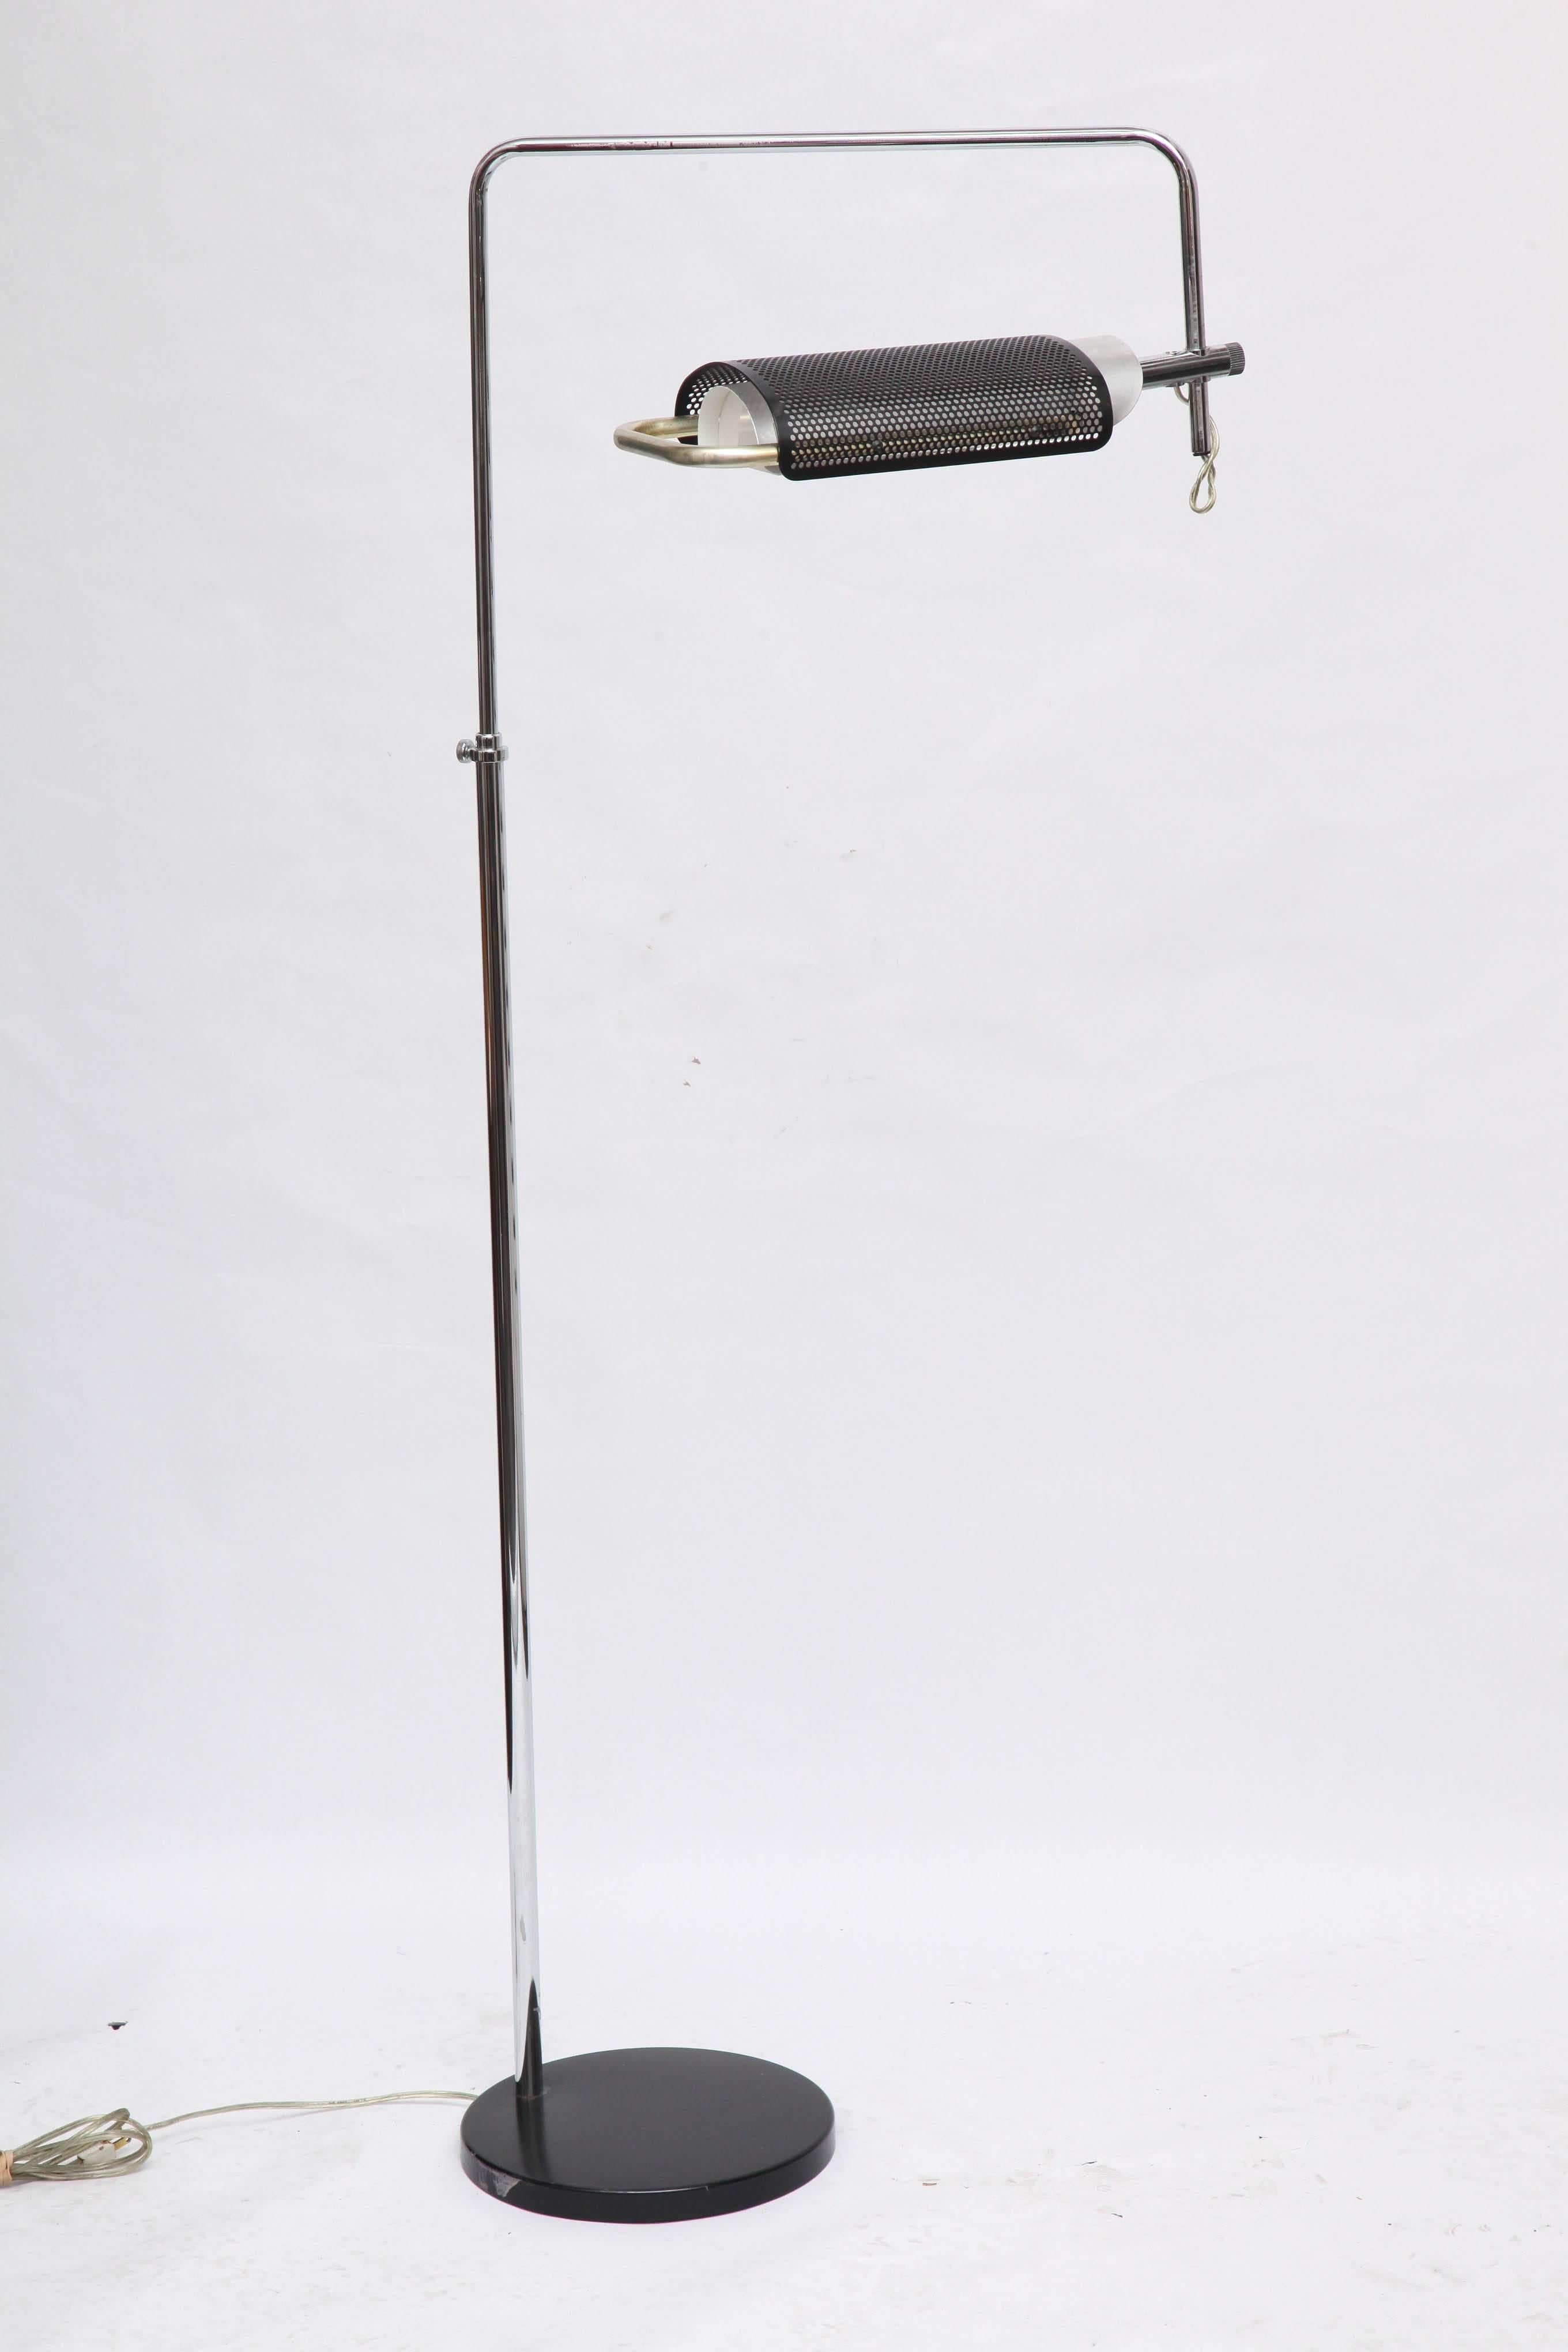 Robert Sonneman Articulated Floor Lamp Mid Century Modern 1970s
New Socket and Rewired